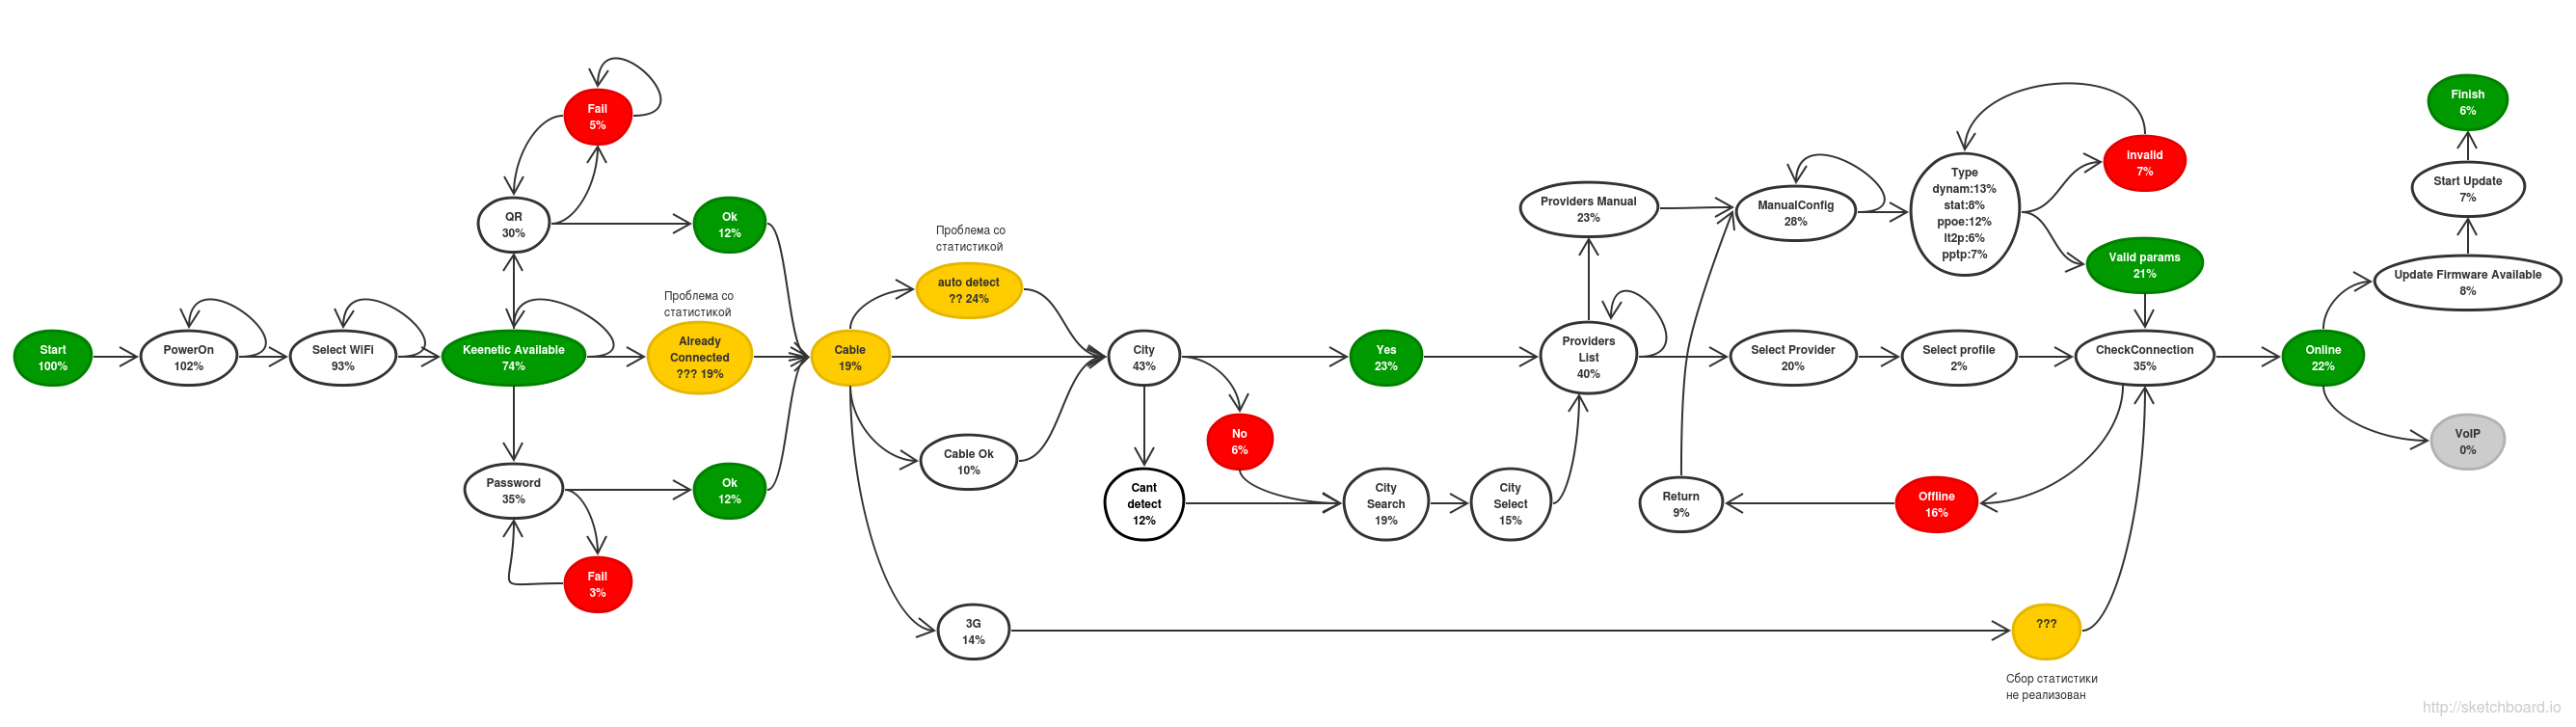 Example decision flow